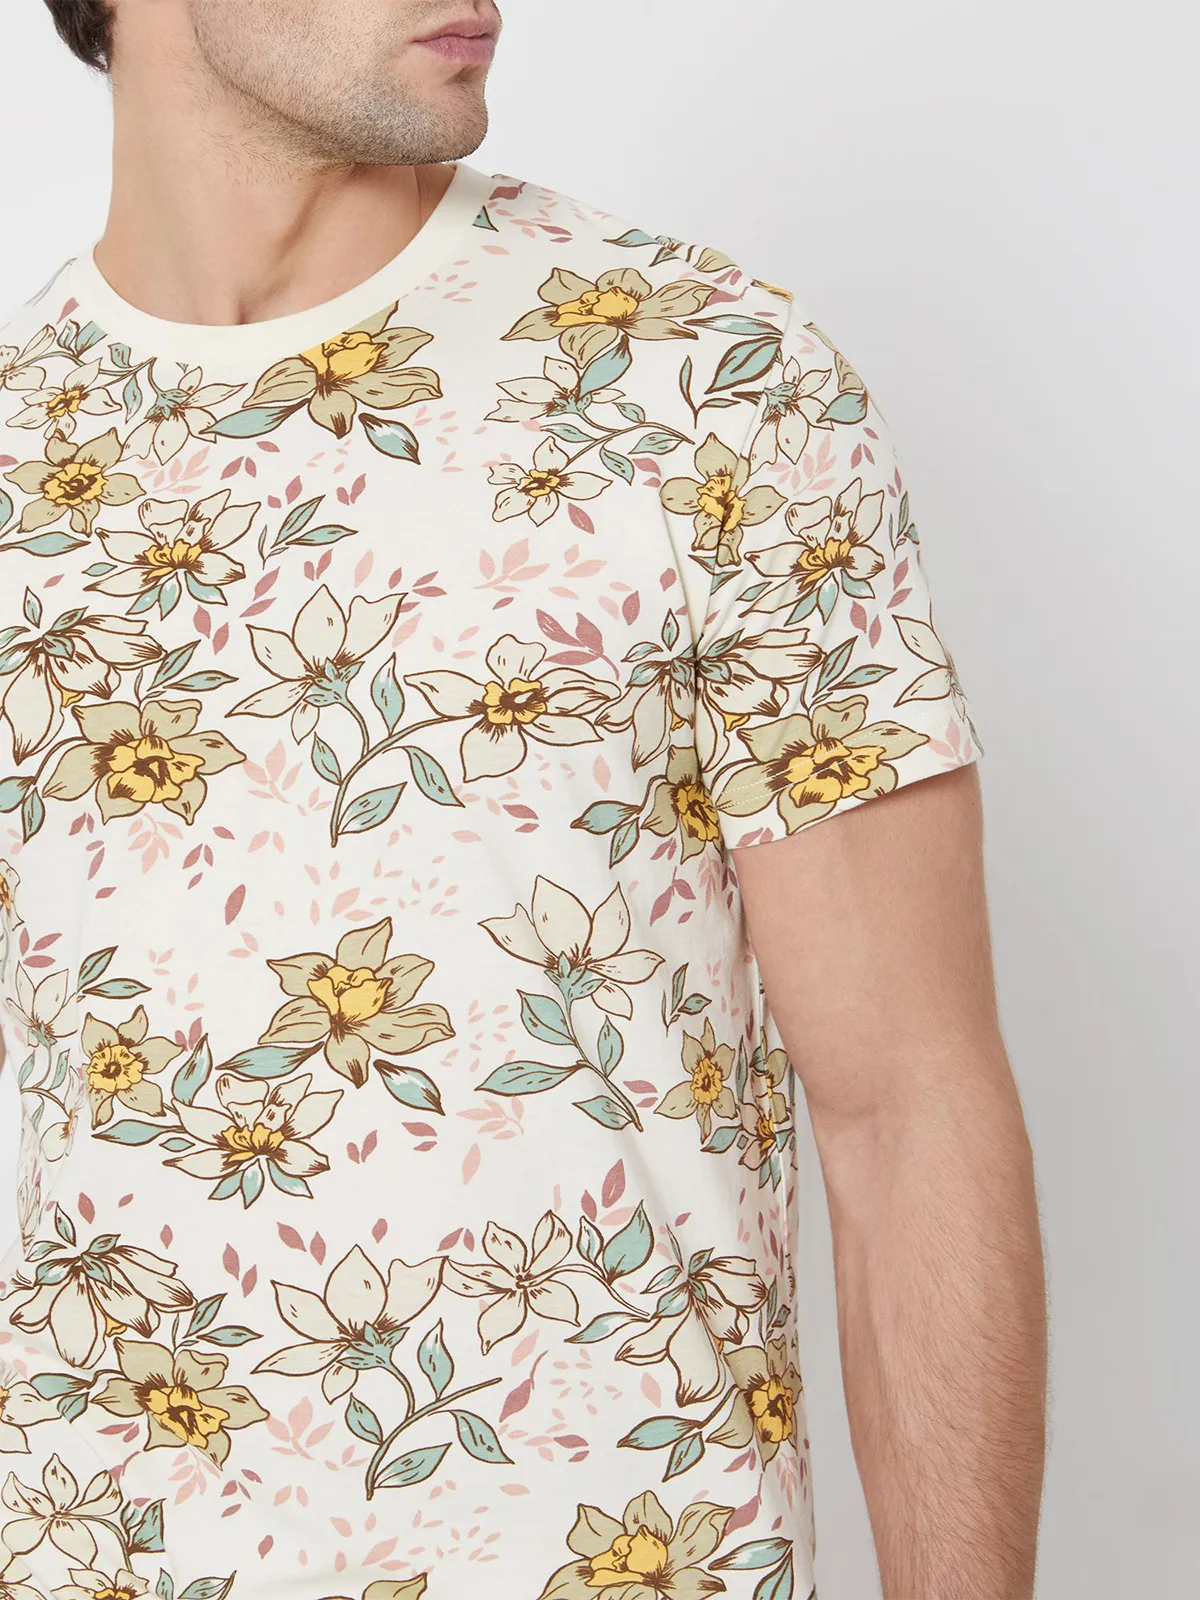 Mufti floral printed cream t-shirt